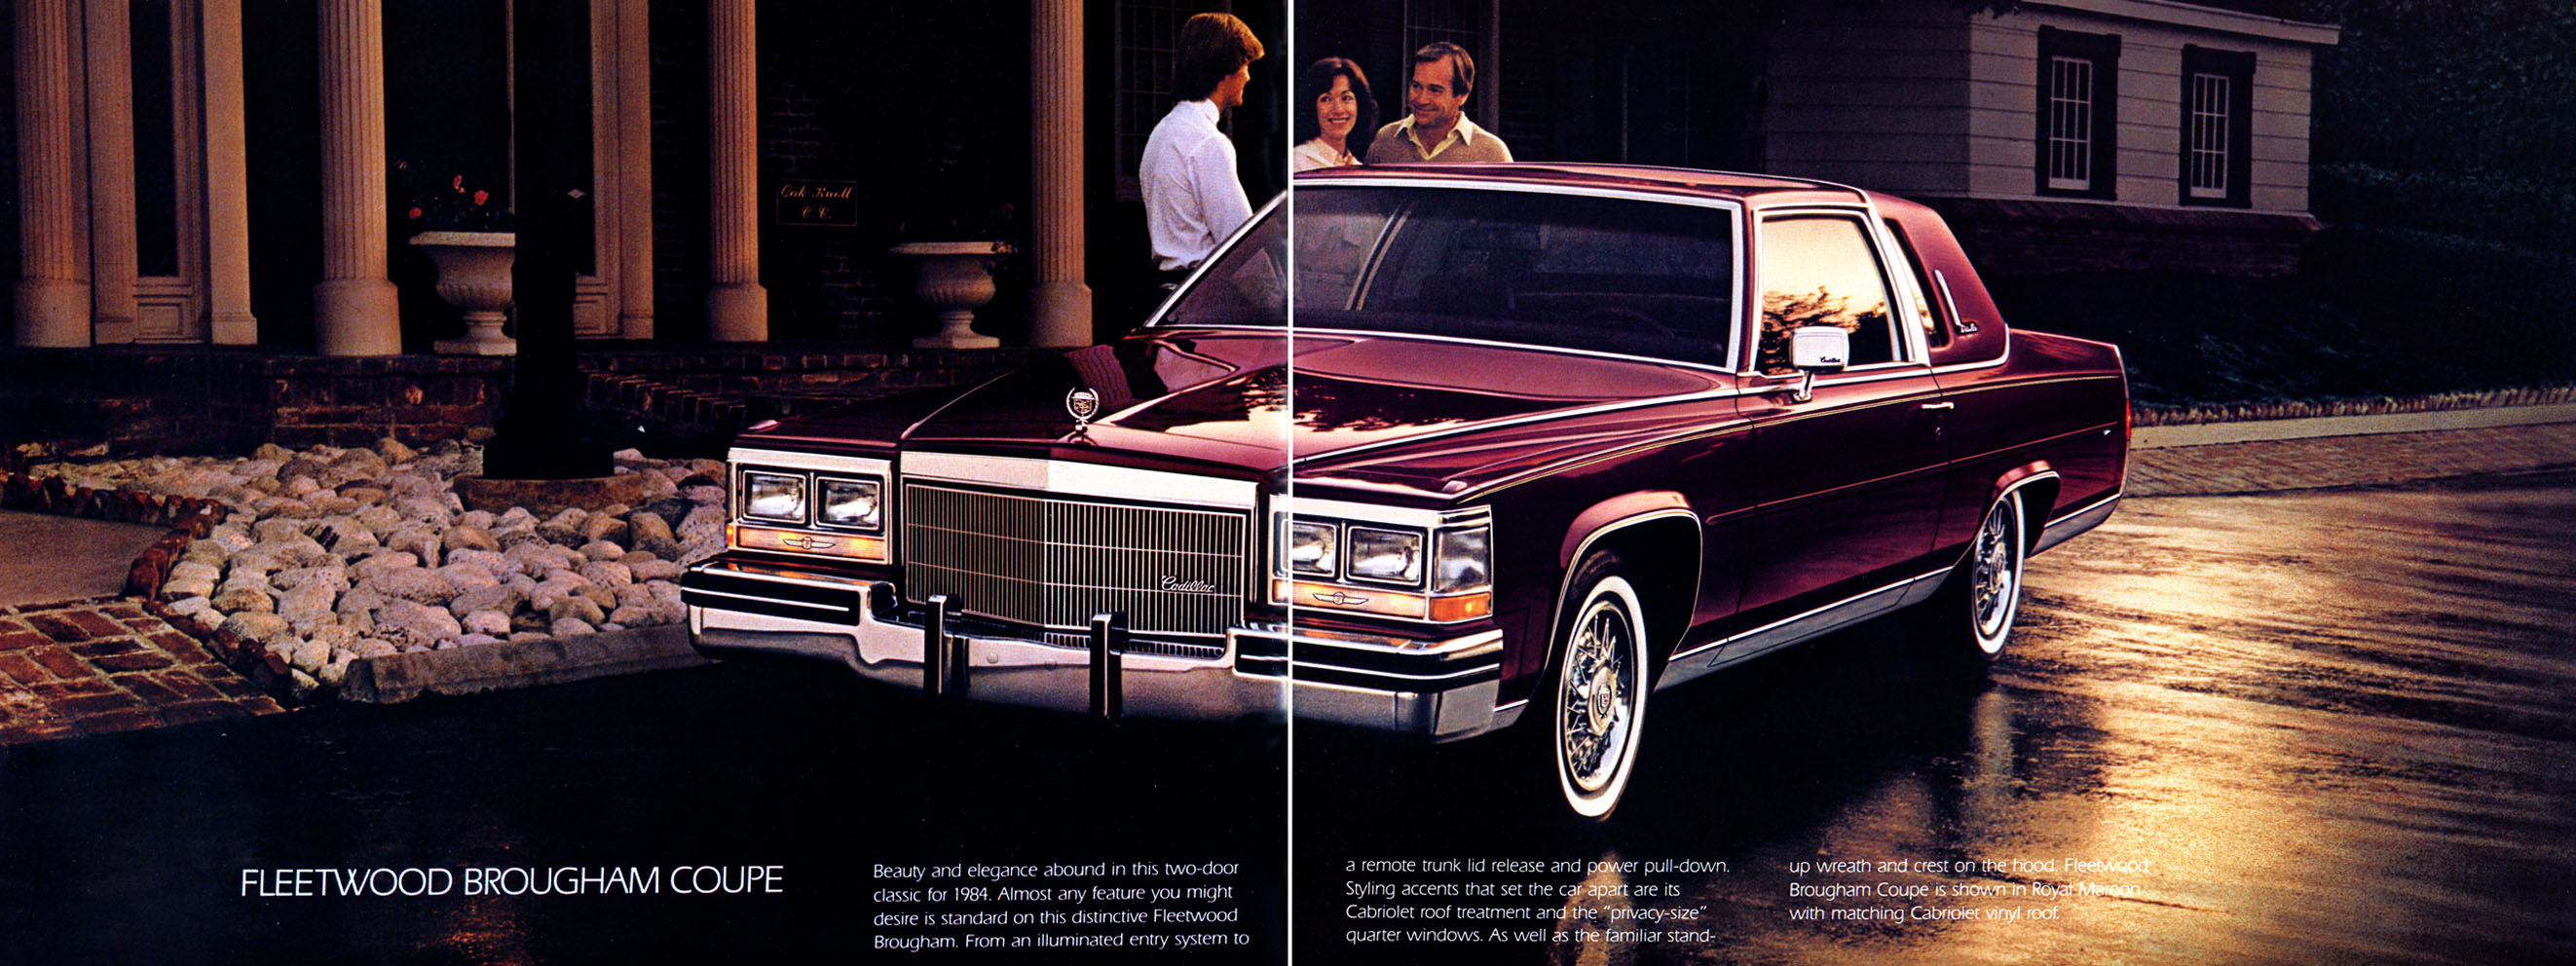 1984_Cadillac-06-07